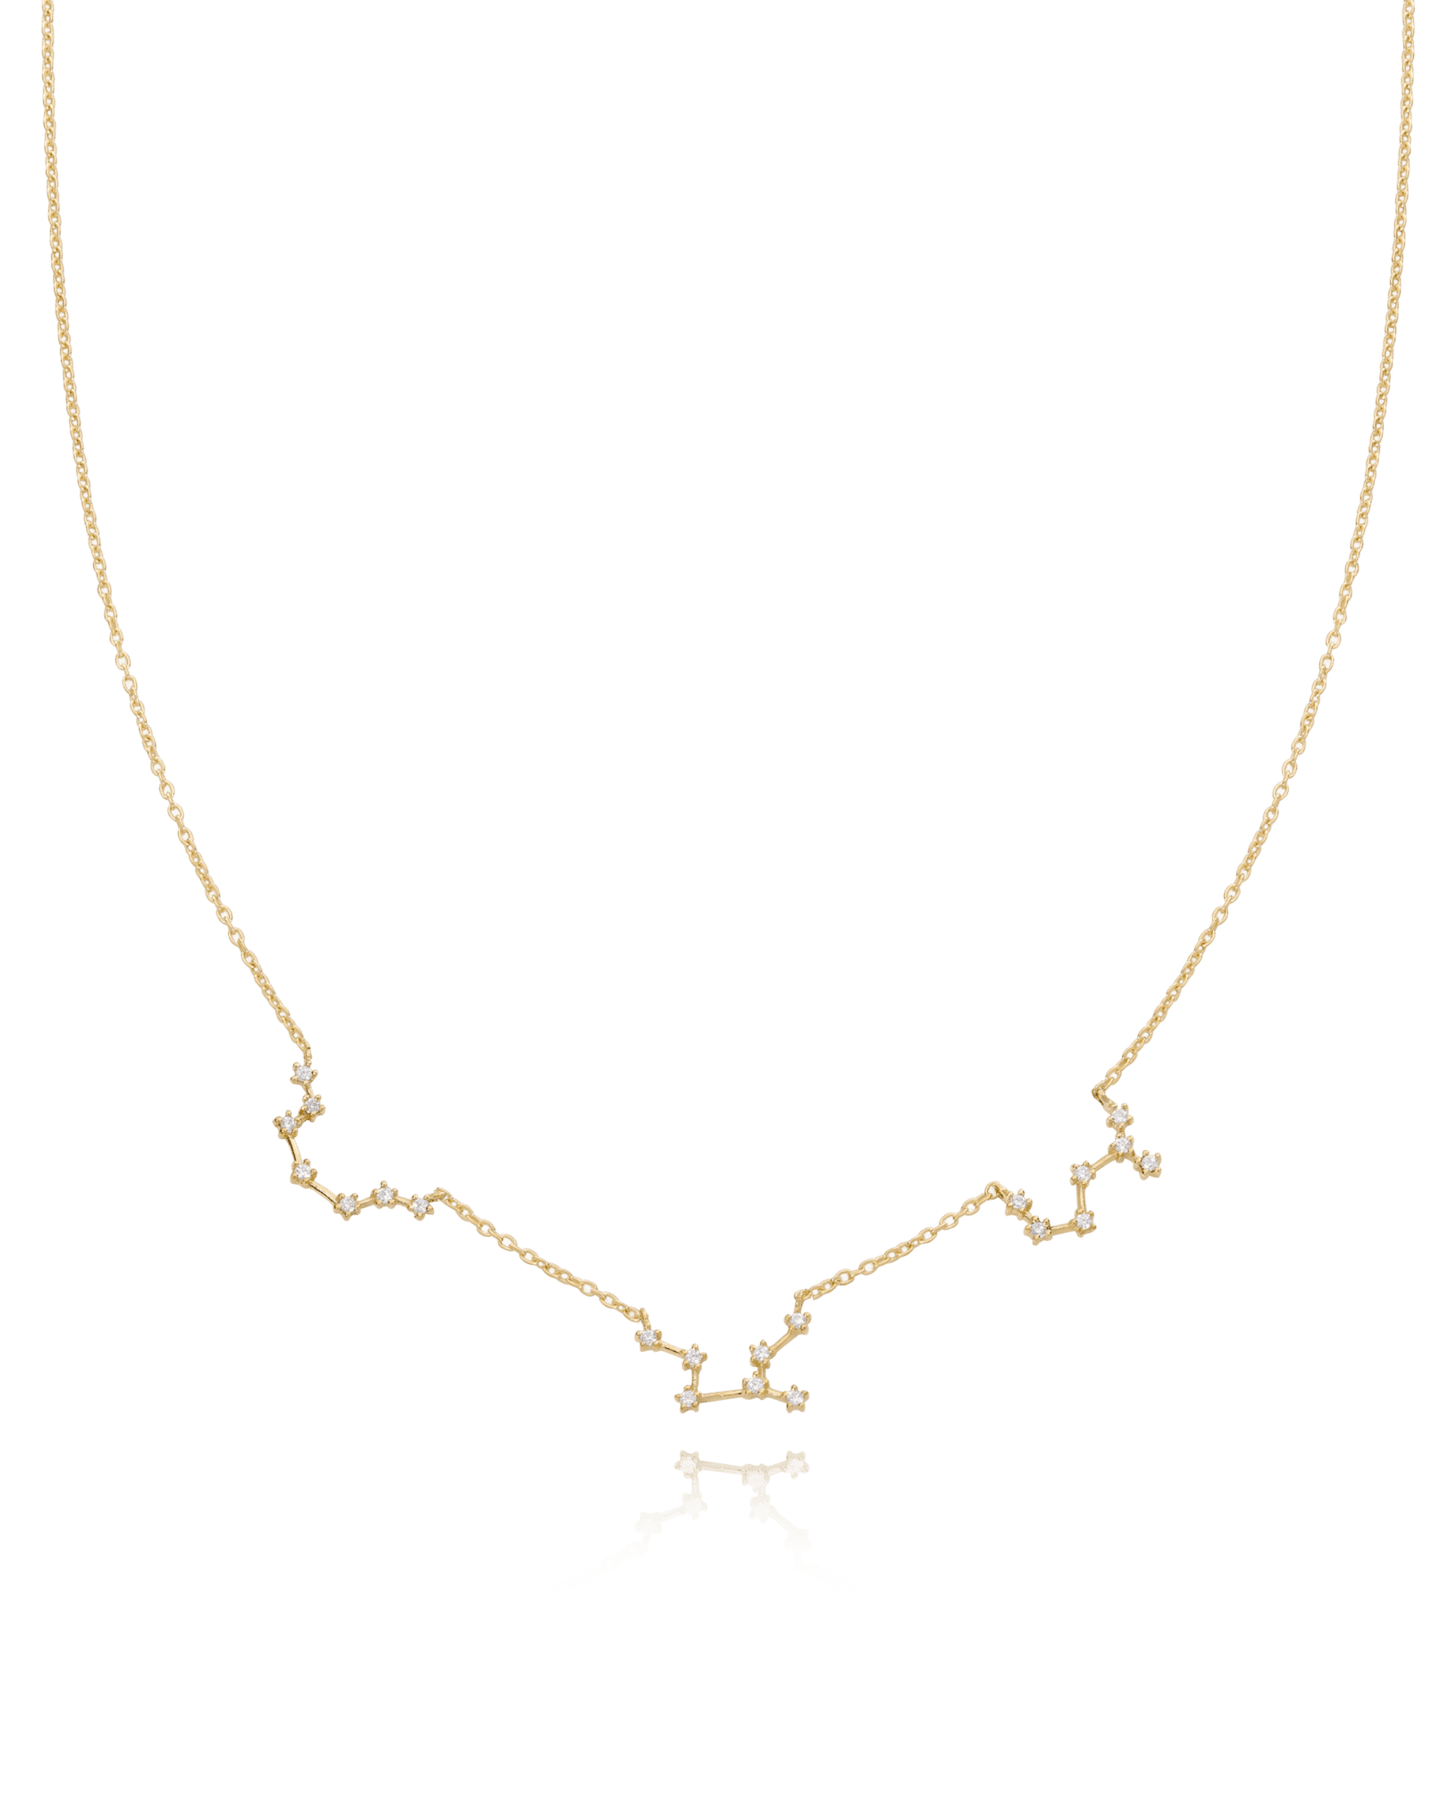 Sets of Constellation Necklaces - 18K Rose Vermeil Necklaces magal-dev 1 Constellation 